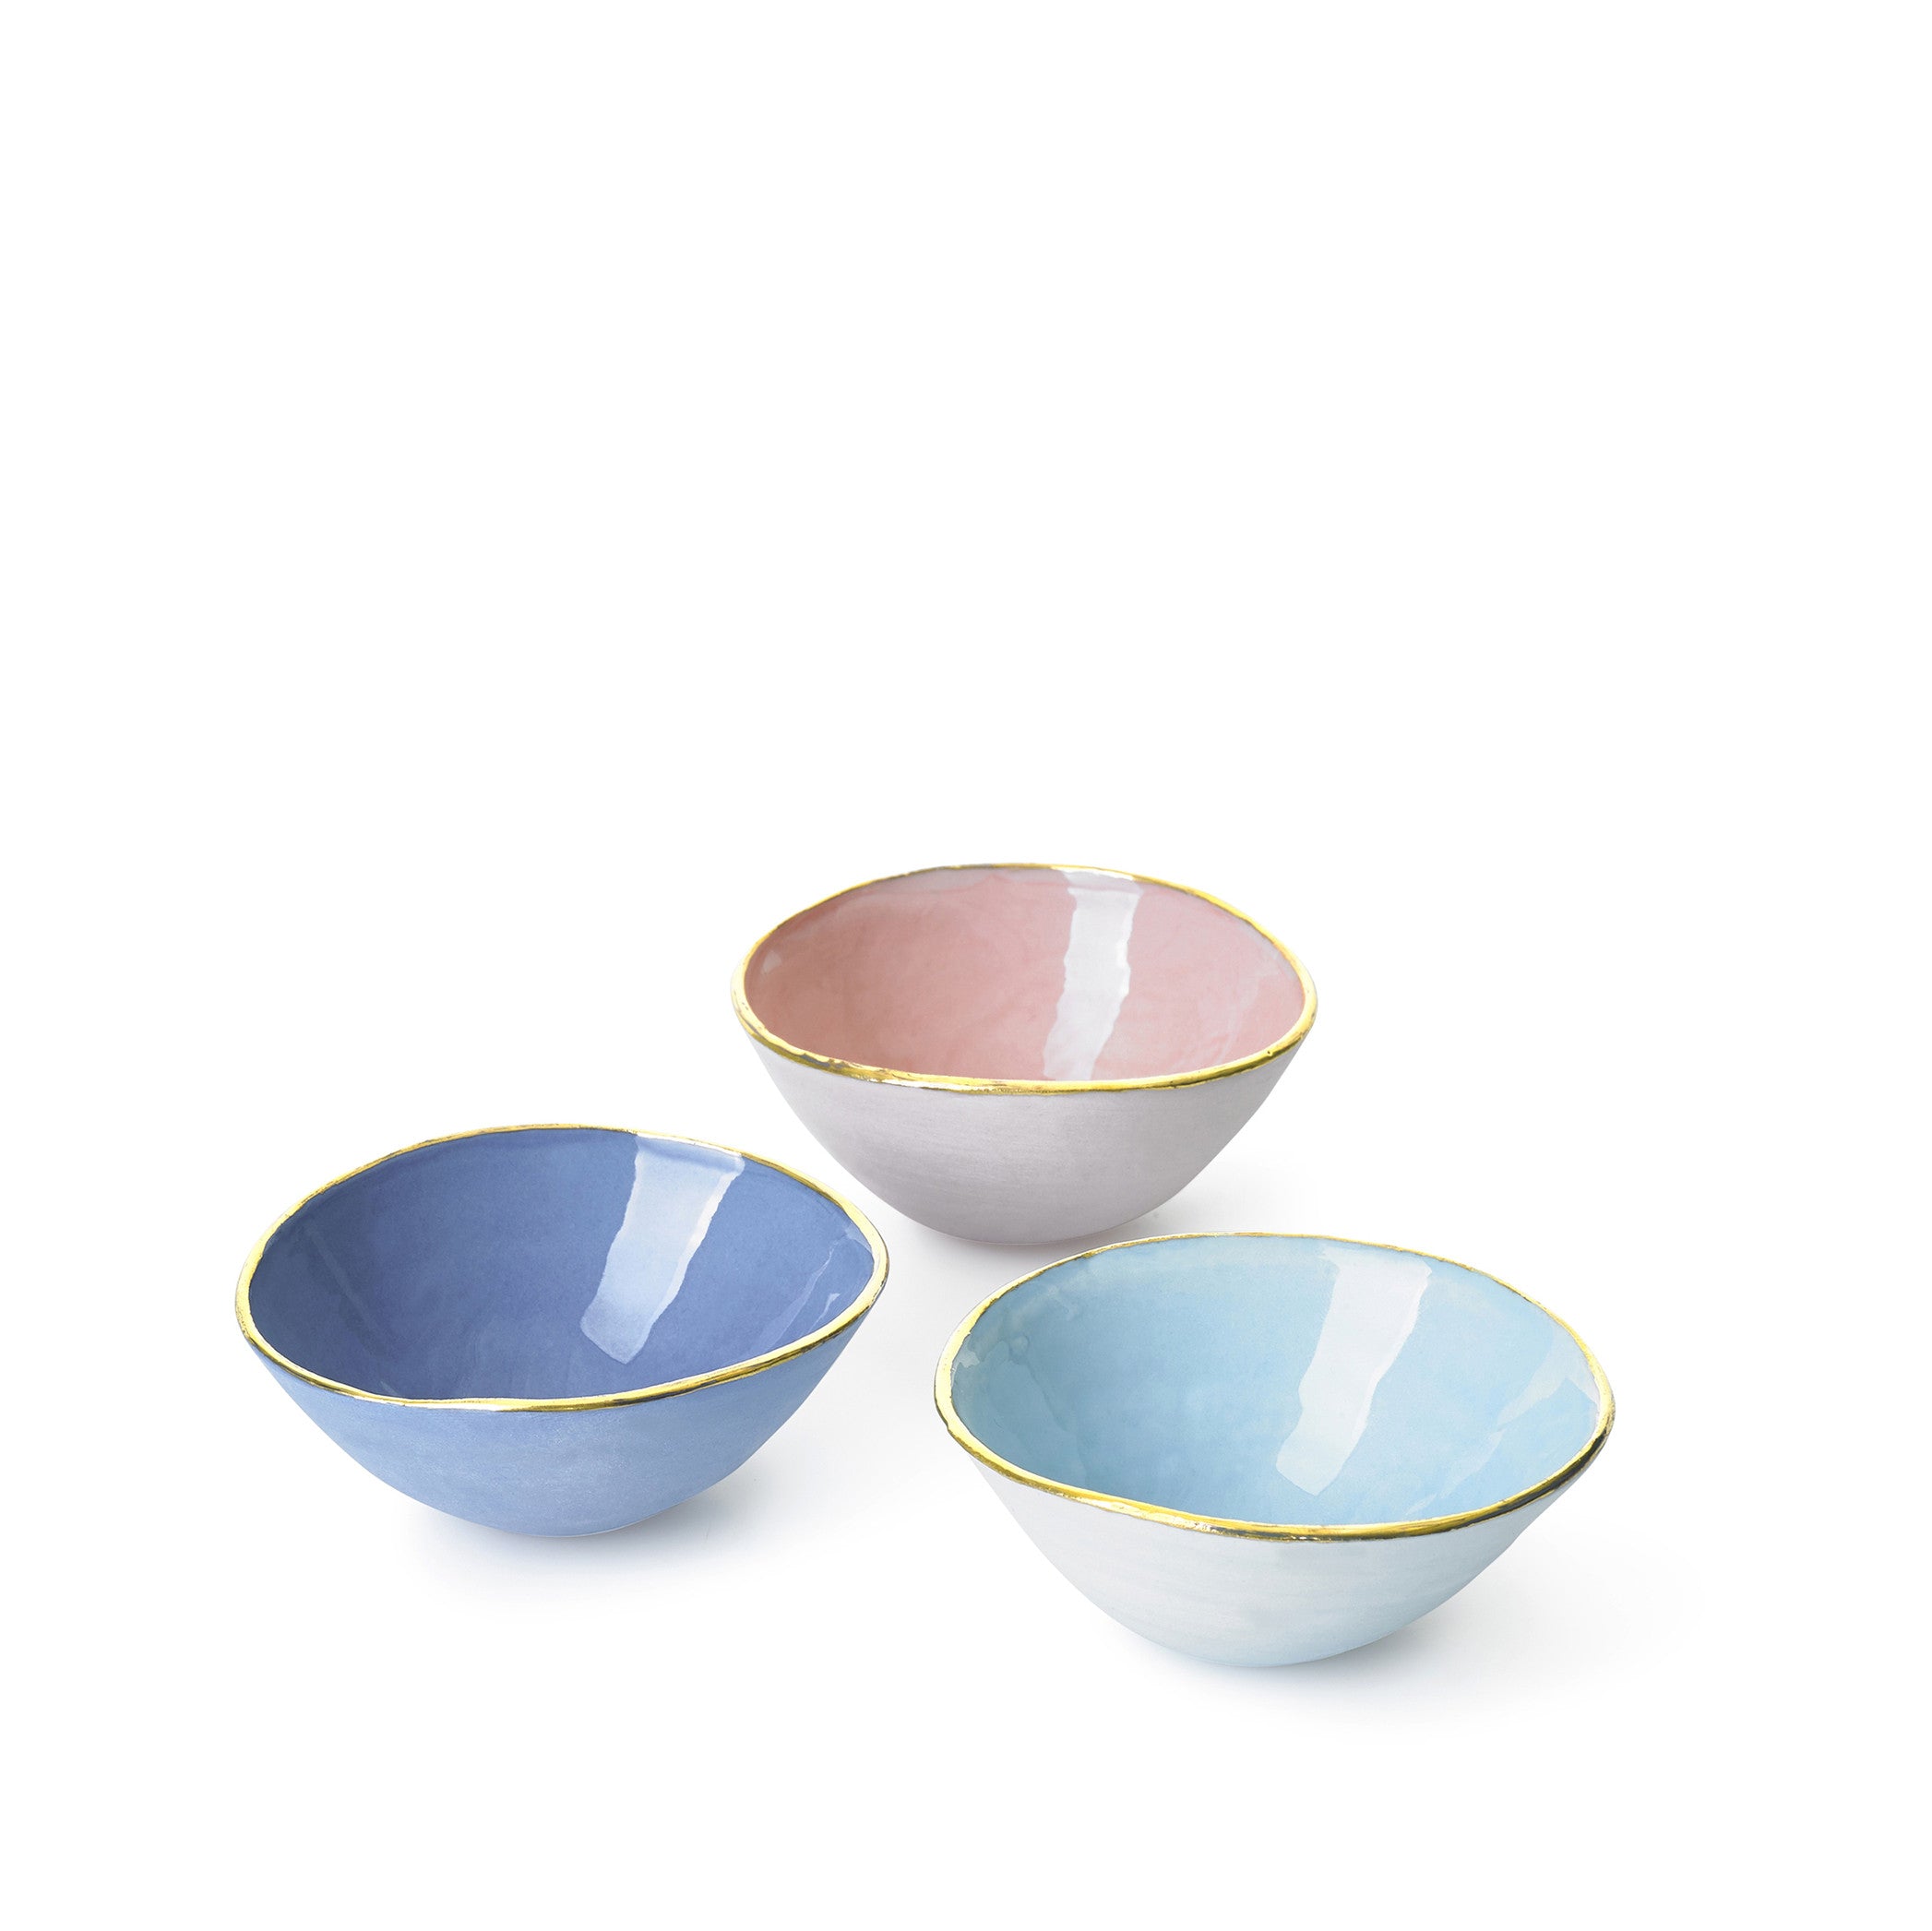 Small Blue Ceramic Bowl with Gold Rim, 6cm